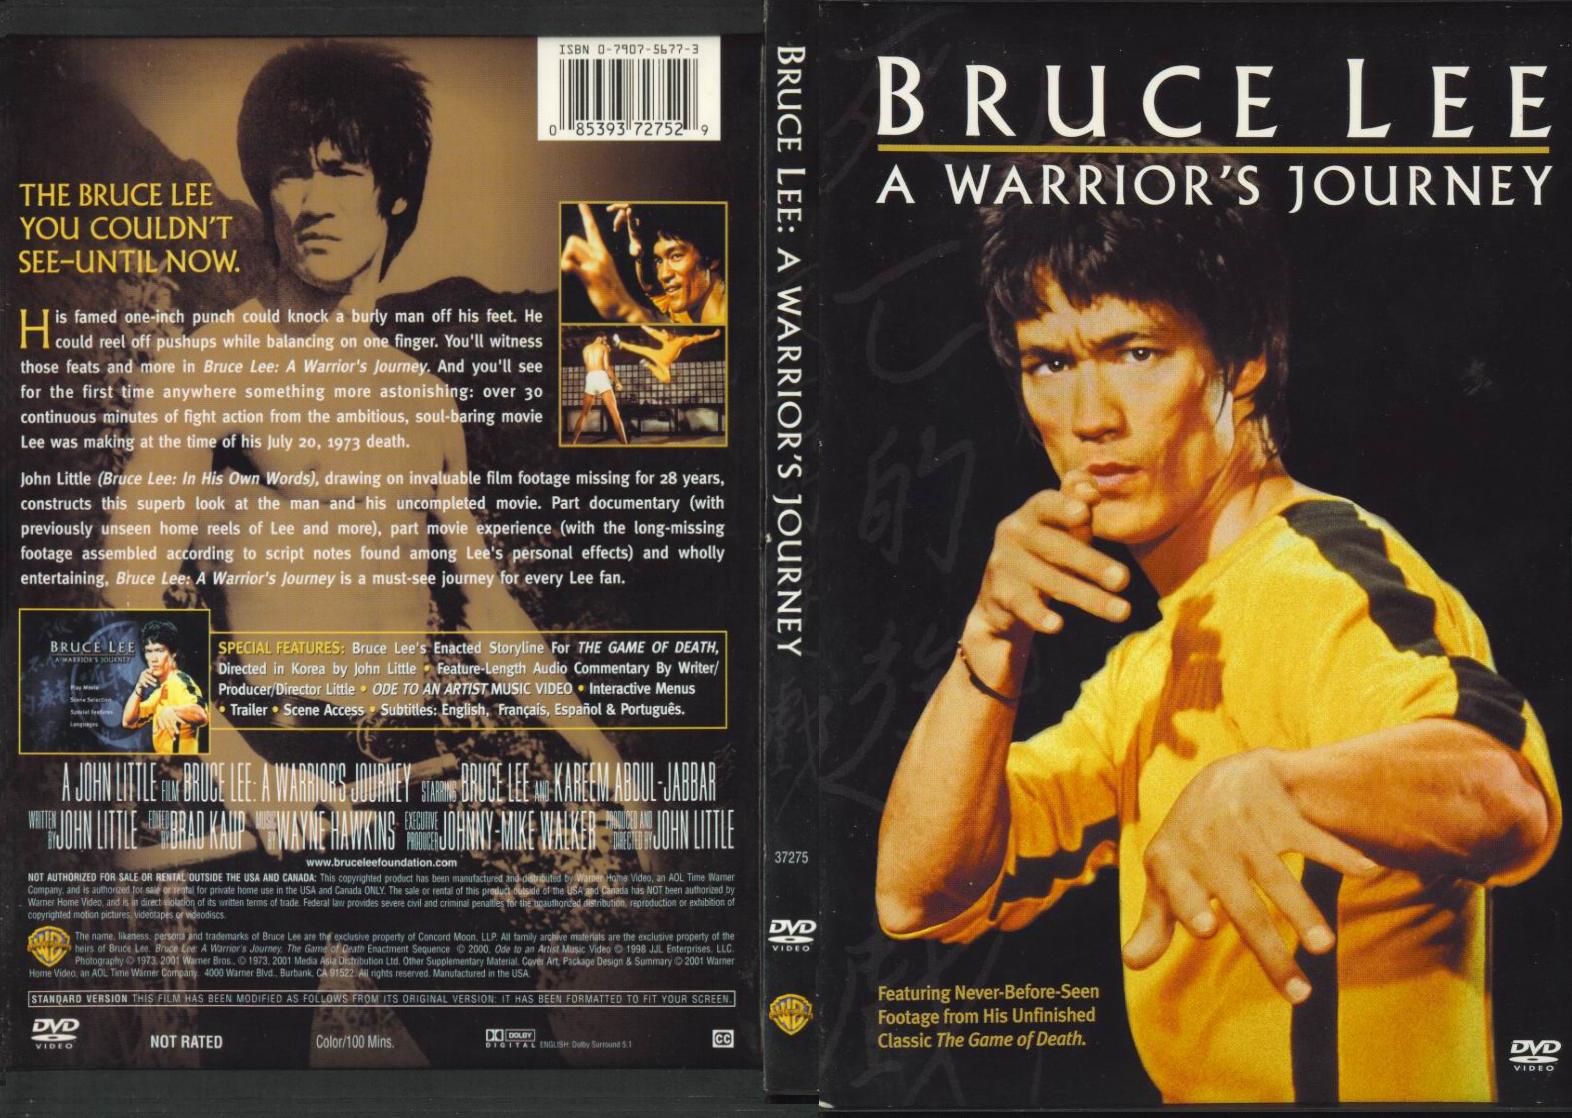 Jaquette DVD Bruce Lee a warrior